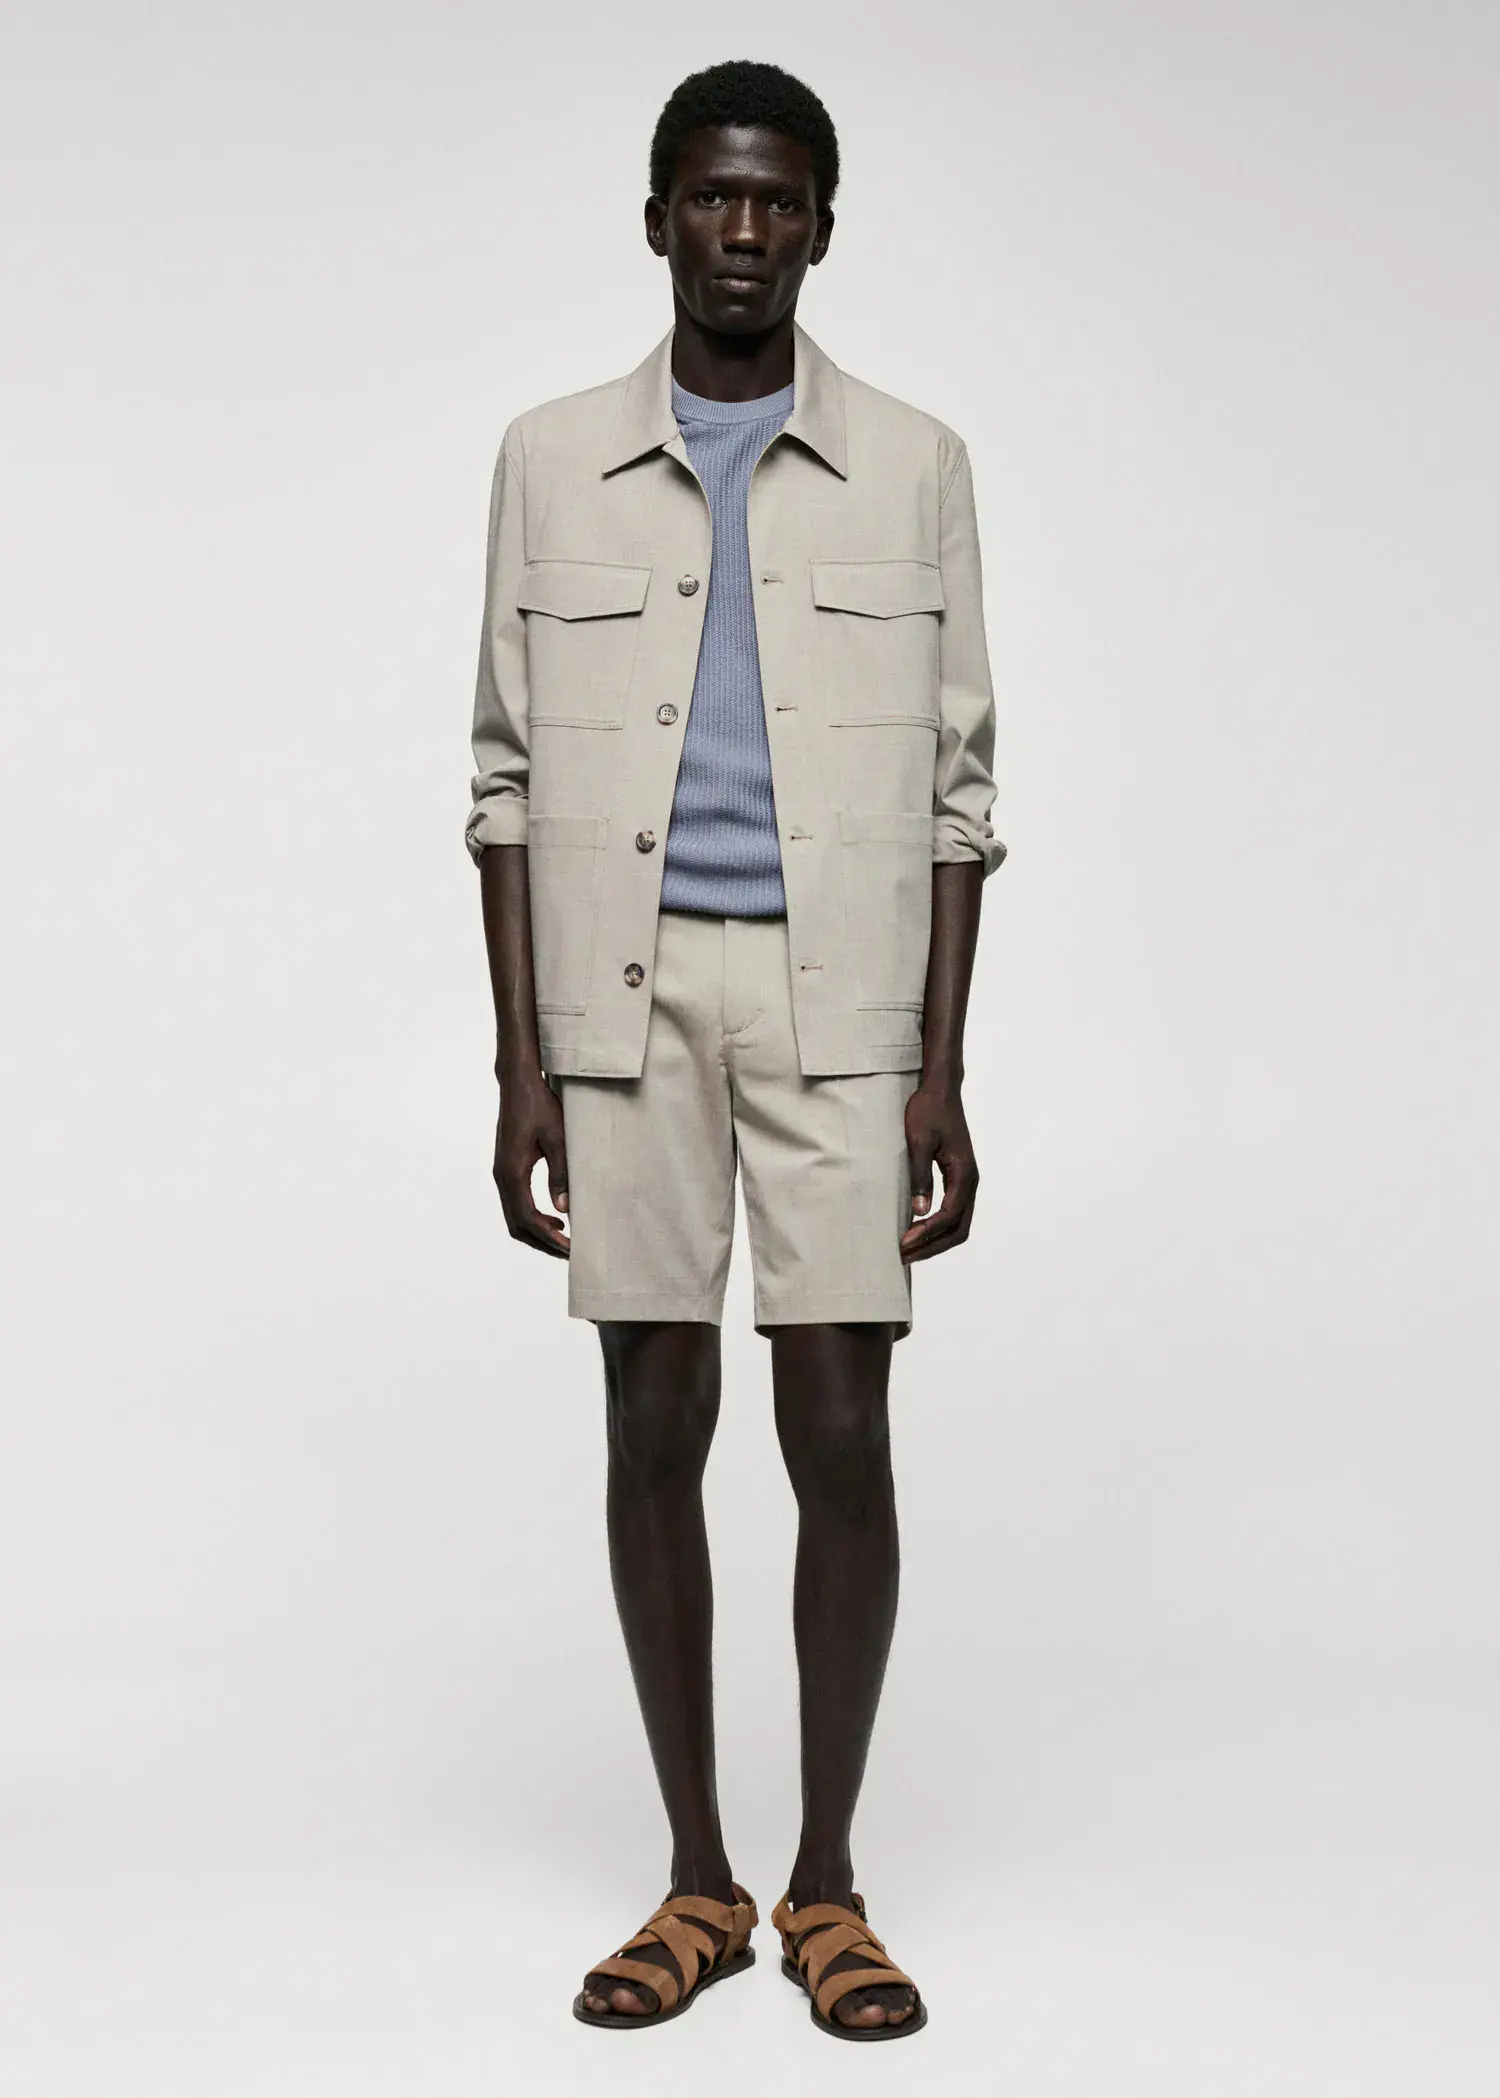 Mango Lightweight pocket jacket. a man in a tan jacket and shorts. 